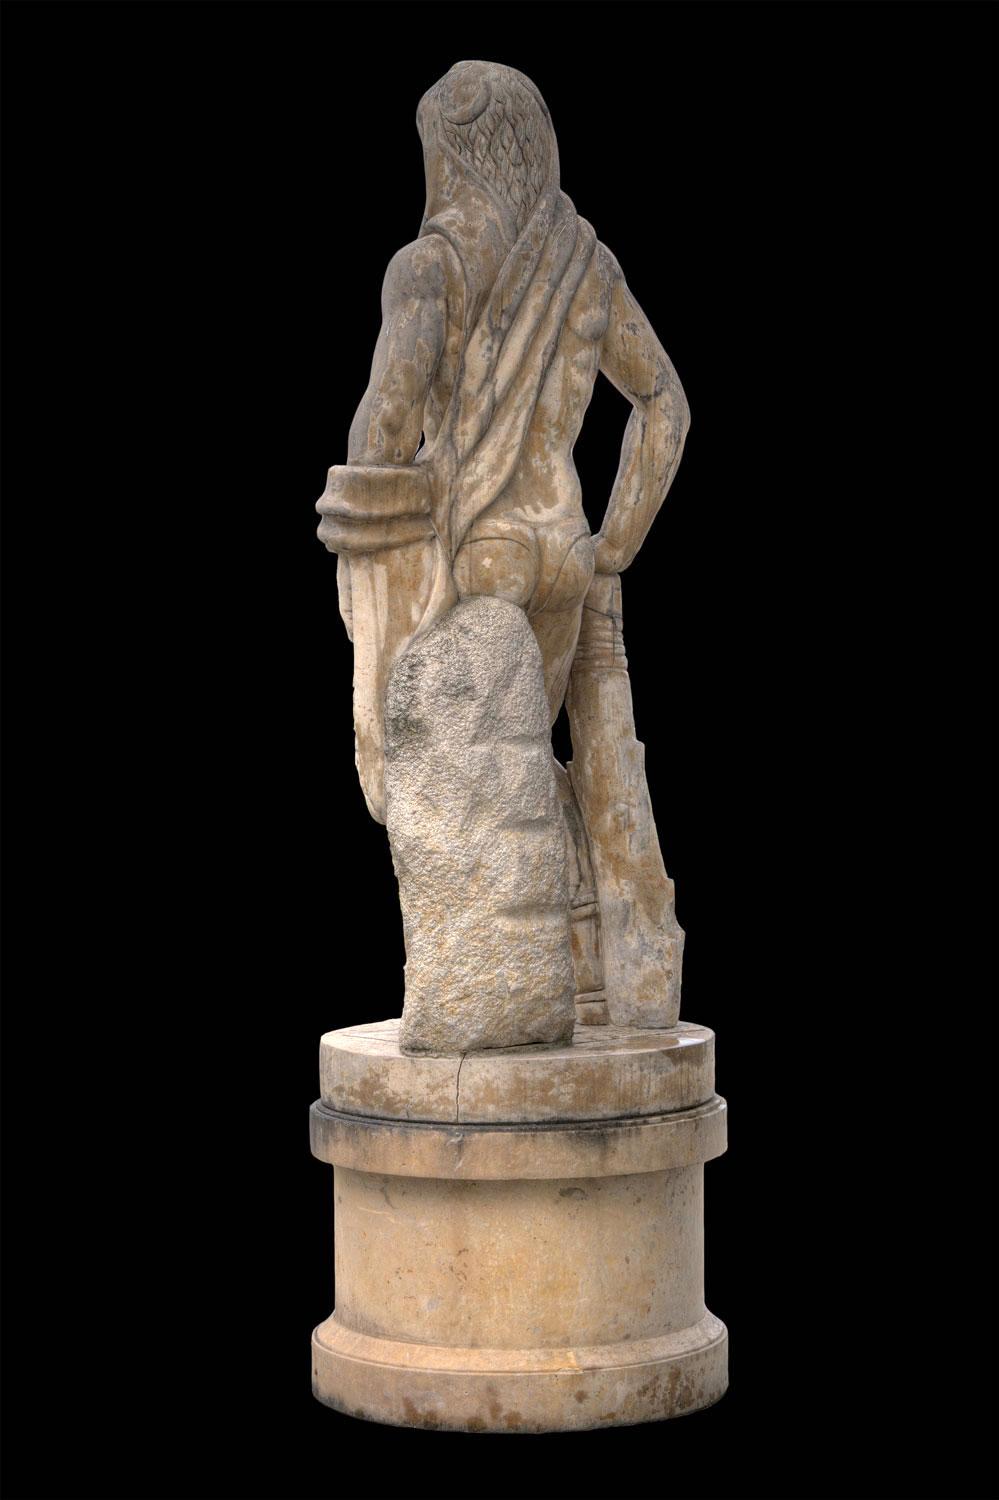  Figuratif figuratif italien en marbre monumental de style rationaliste  Sculptures de nus en vente 13